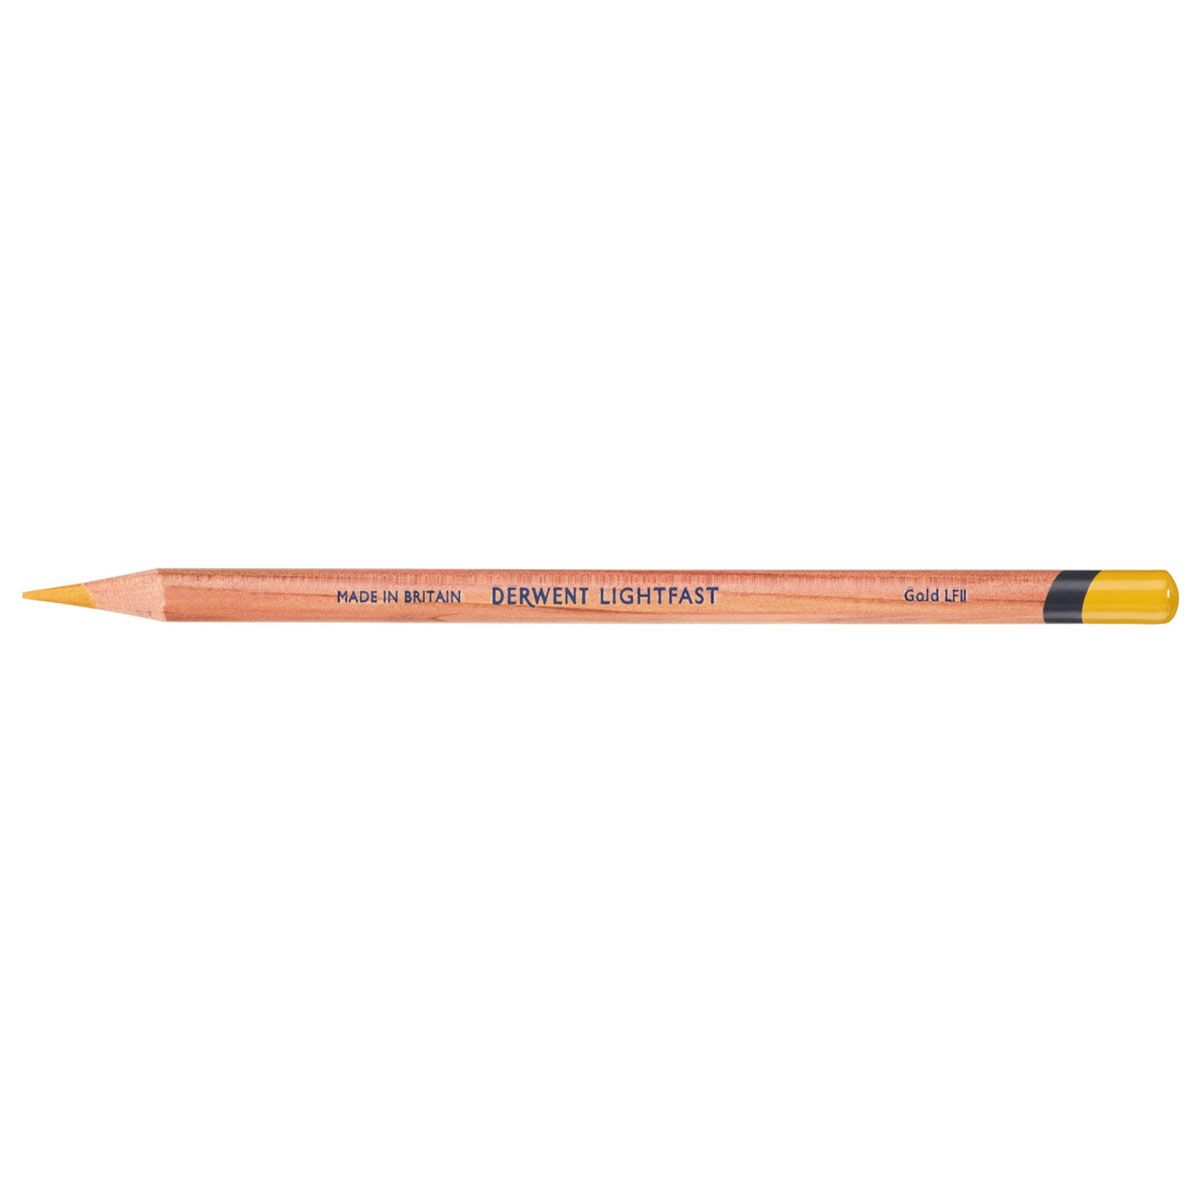 NEW Derwent Lightfast Pencil Colour: Gold